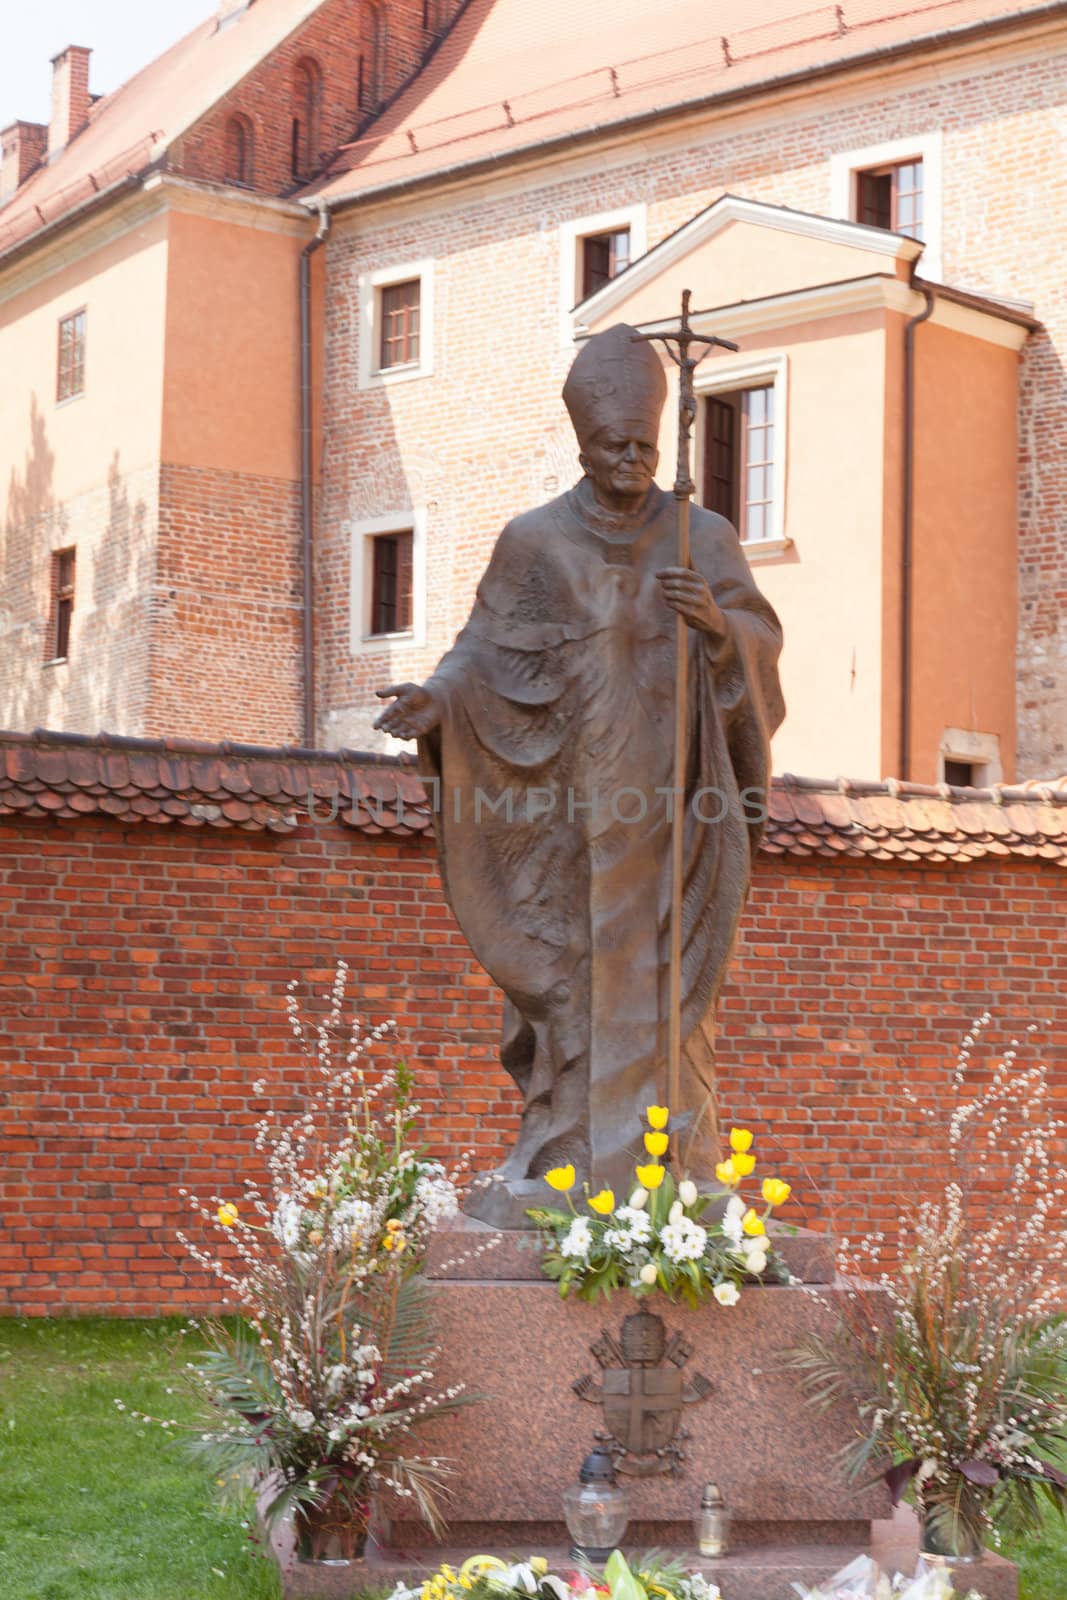 Pope John Paul II Statue at Wawel, Cracow, Poland.